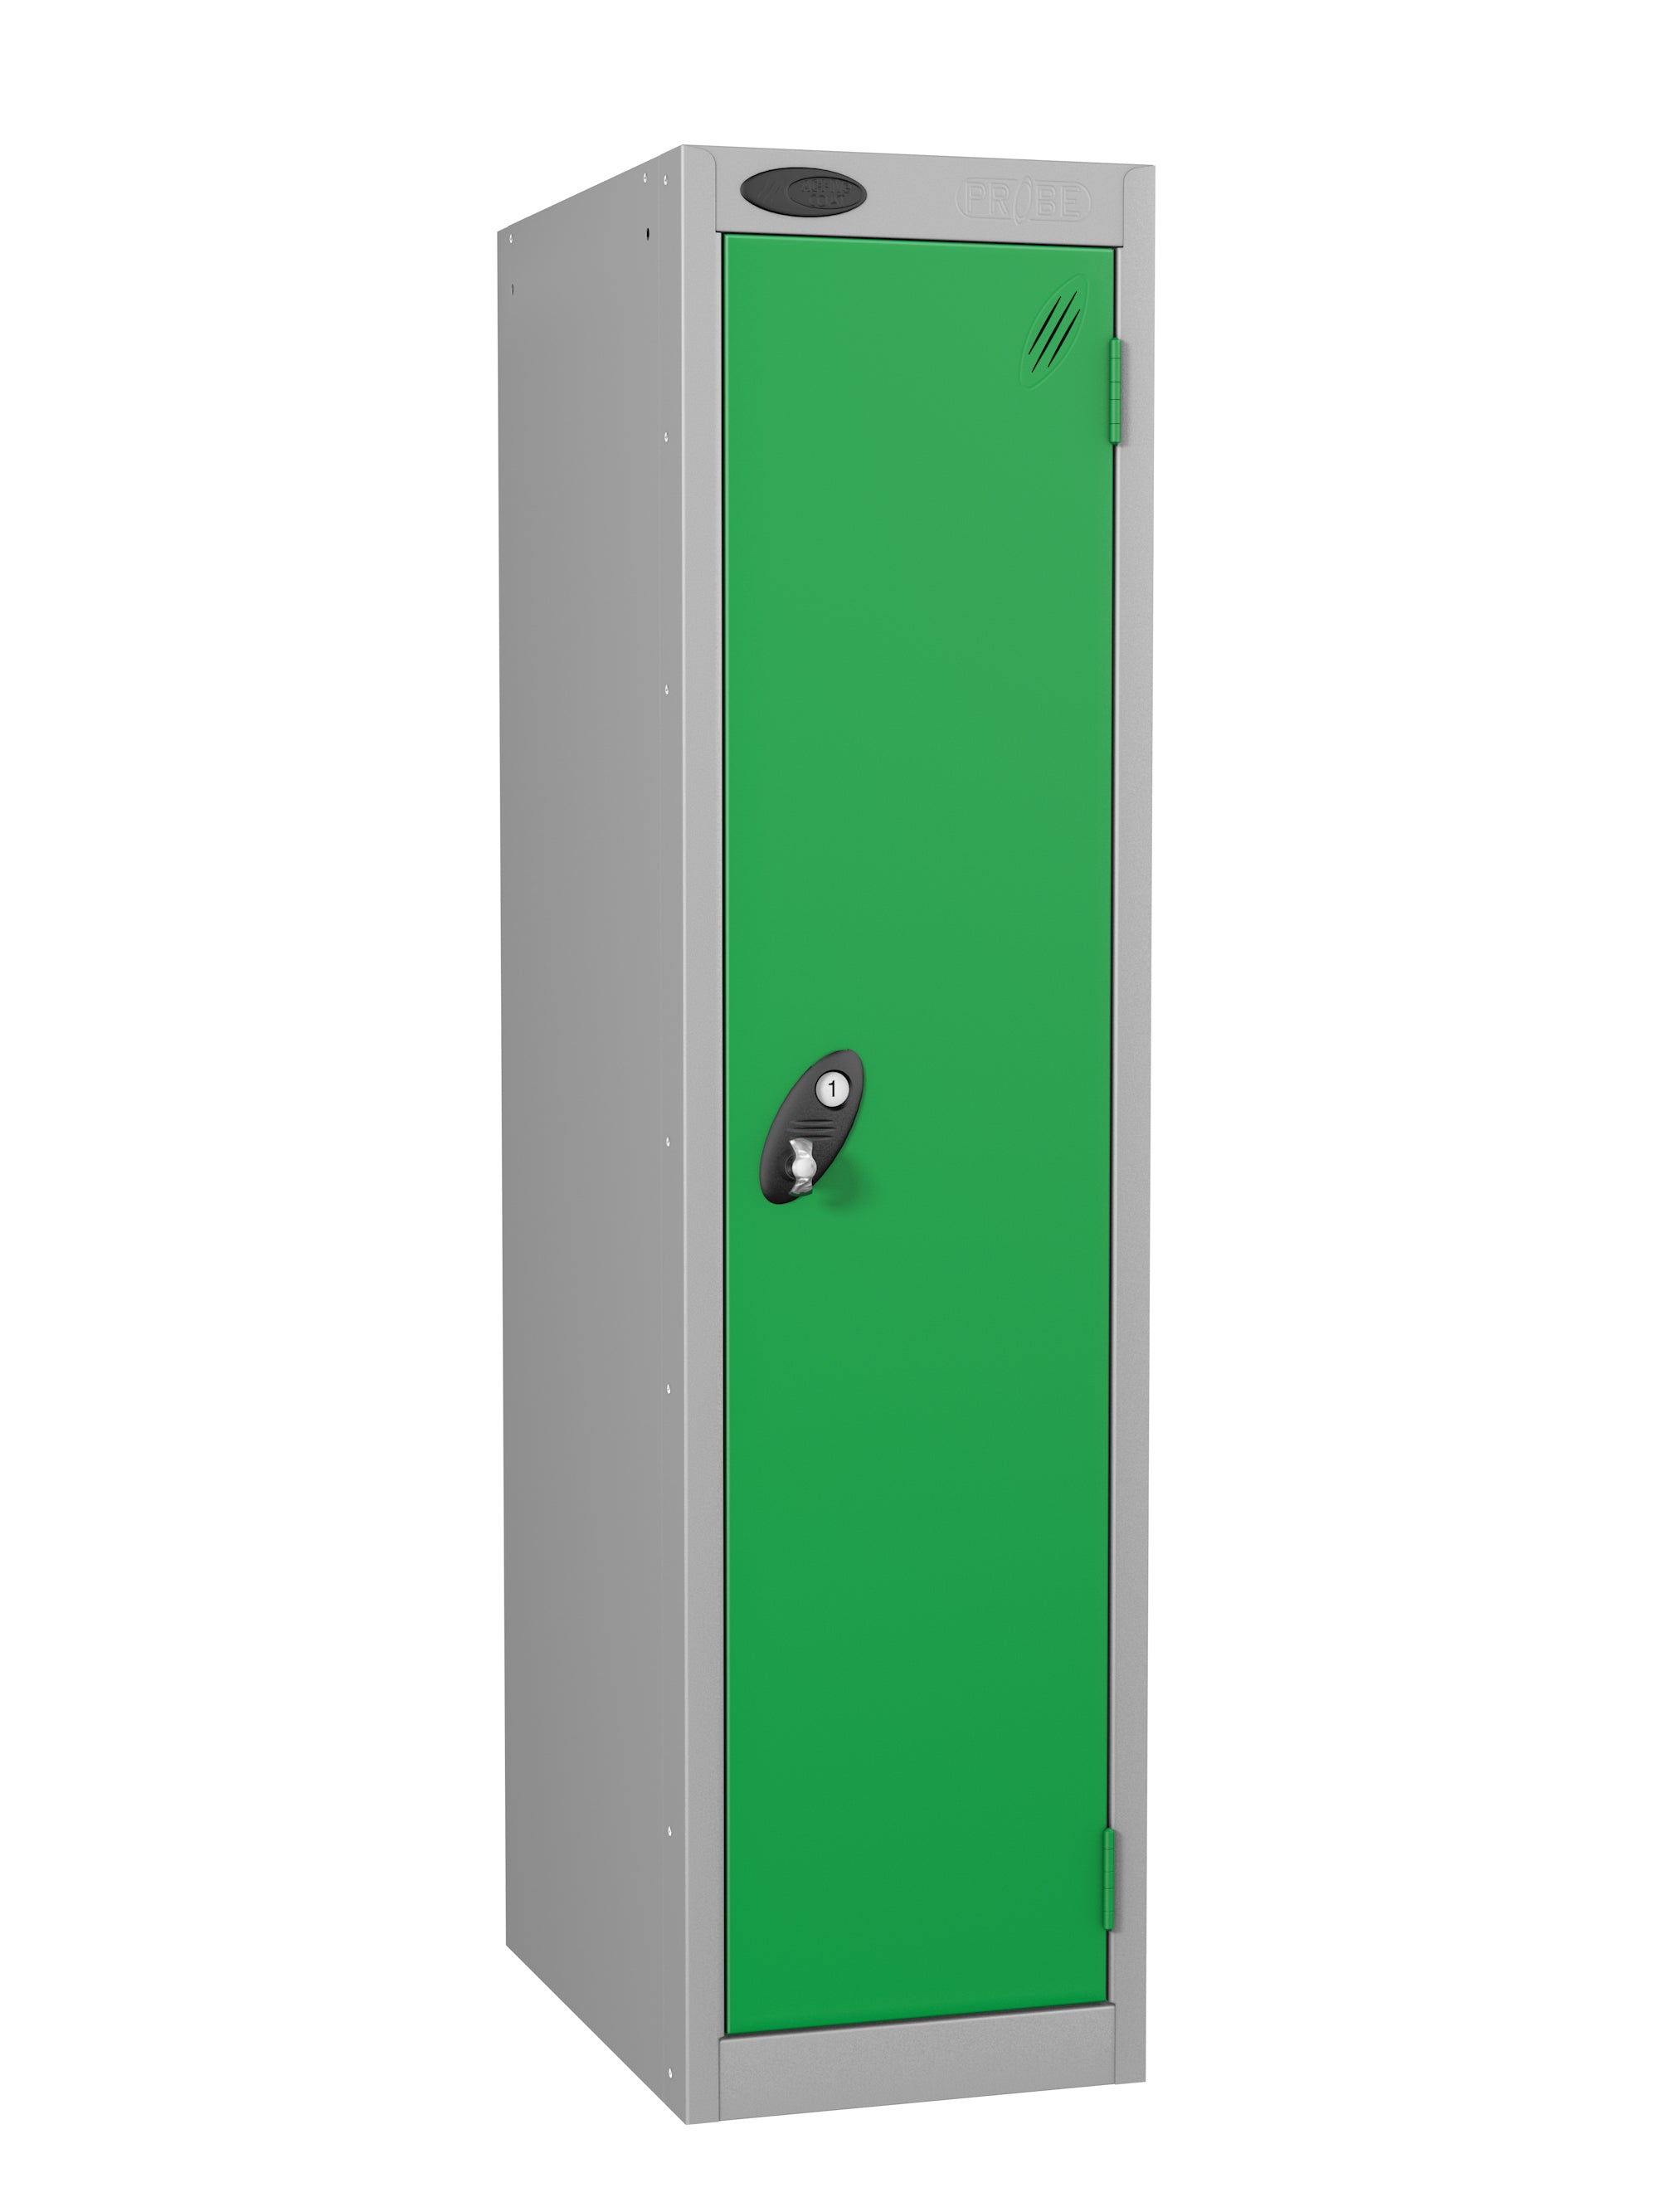 PROBELOW LOW LEVEL 1 NEST STEEL LOCKERS - FOREST GREEN 1 DOOR Storage Lockers > Lockers > Cabinets > Storage > Probe > One Stop For Safety   